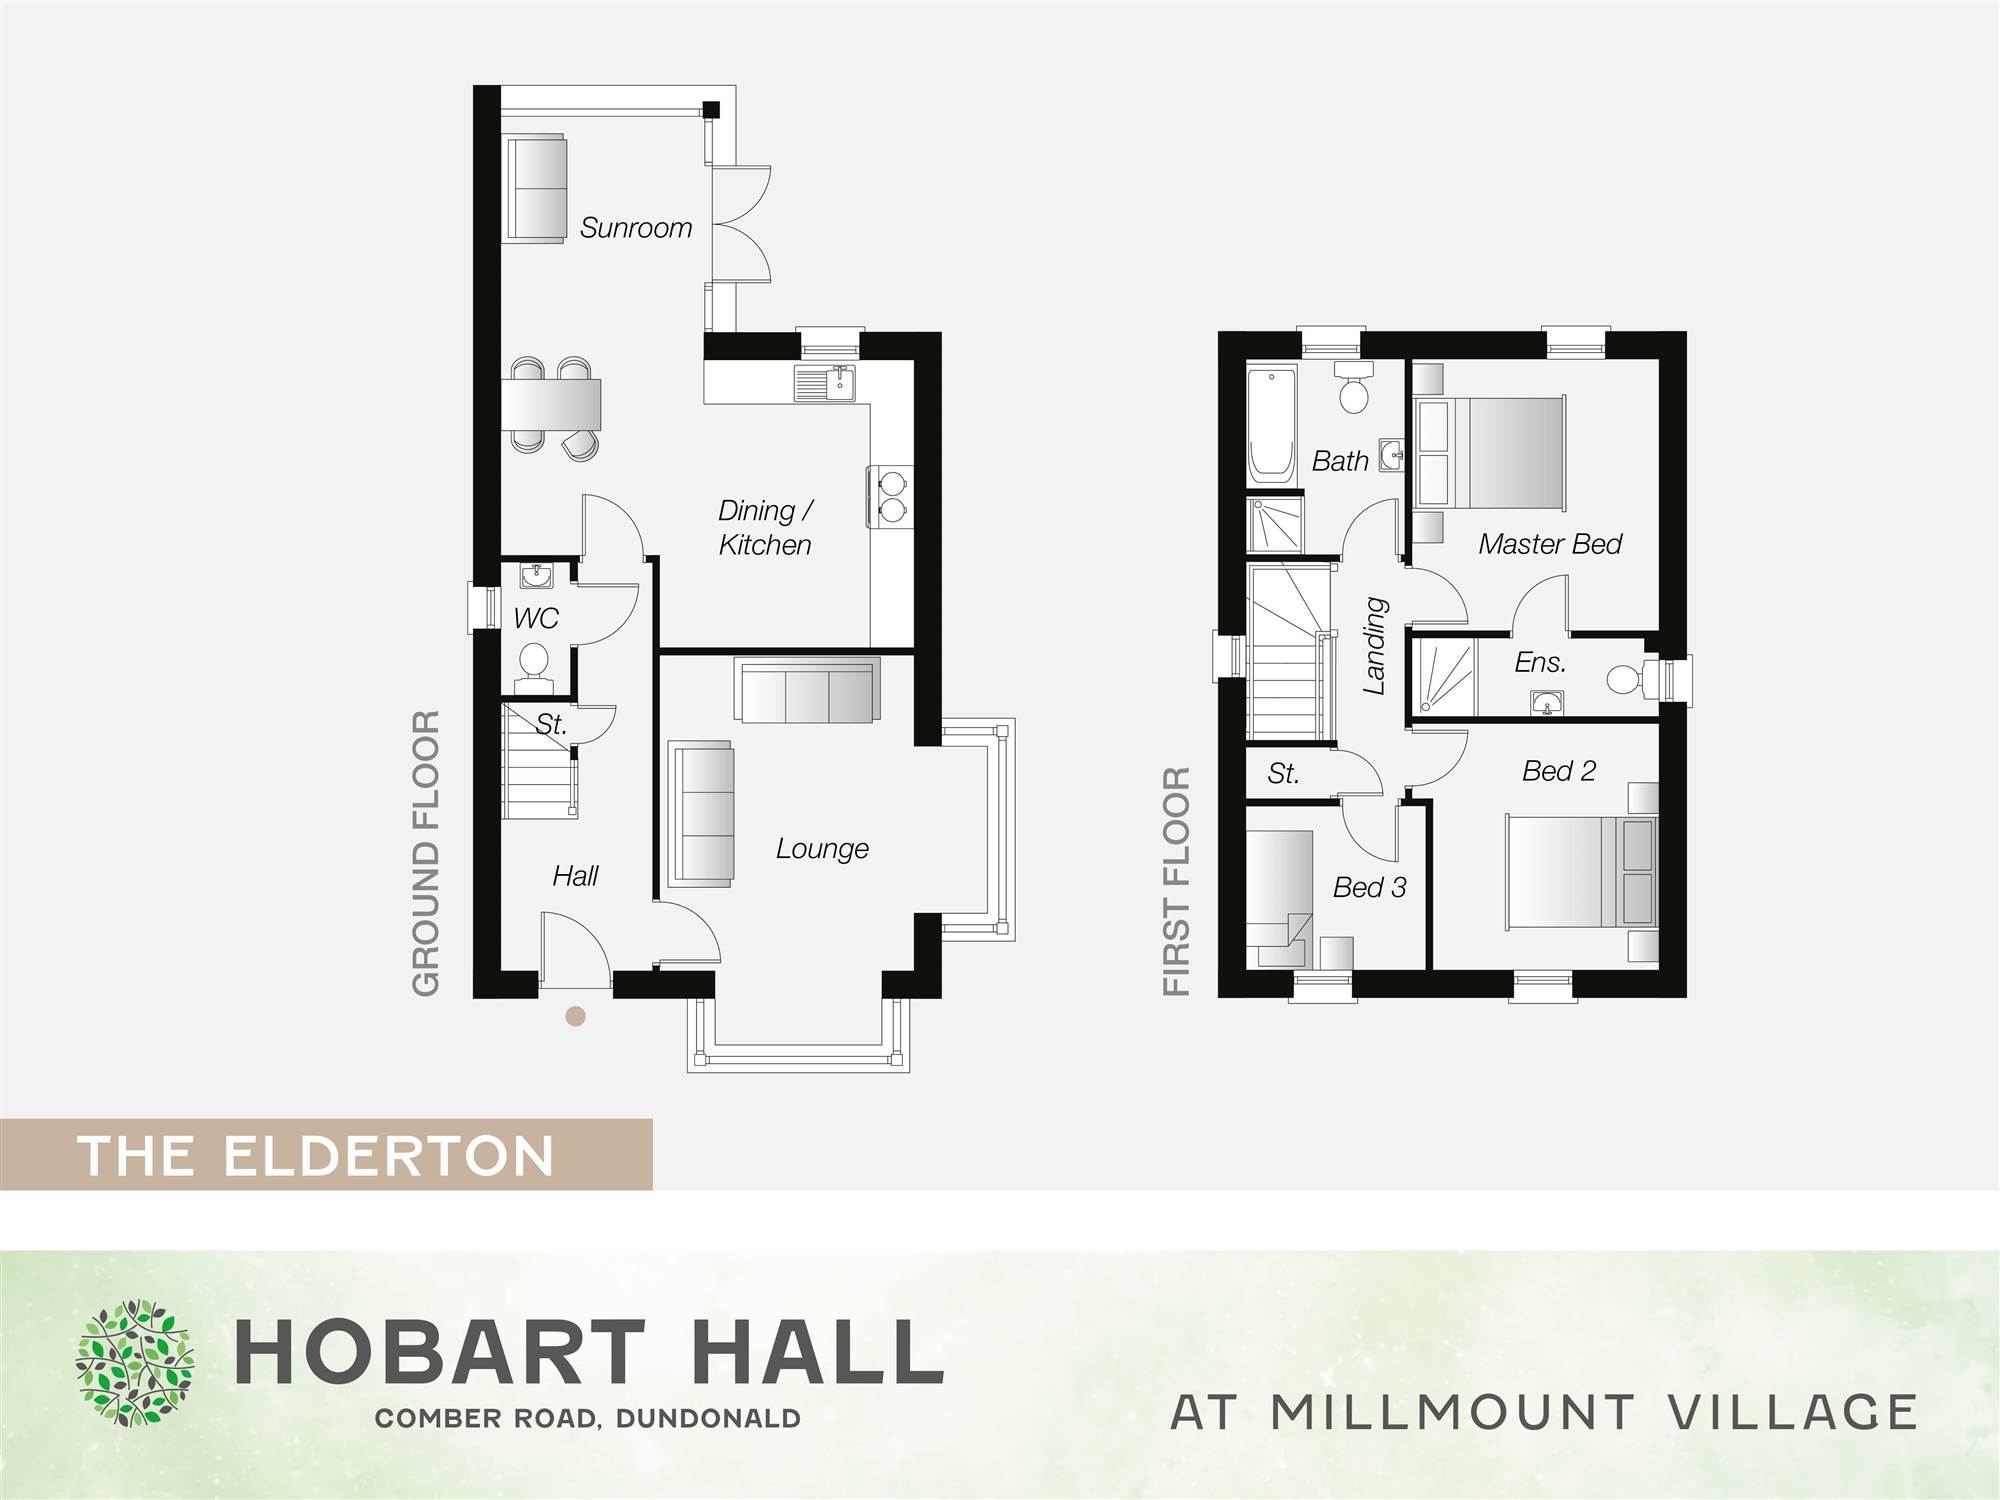 6 Hobart Hall at Millmount Village